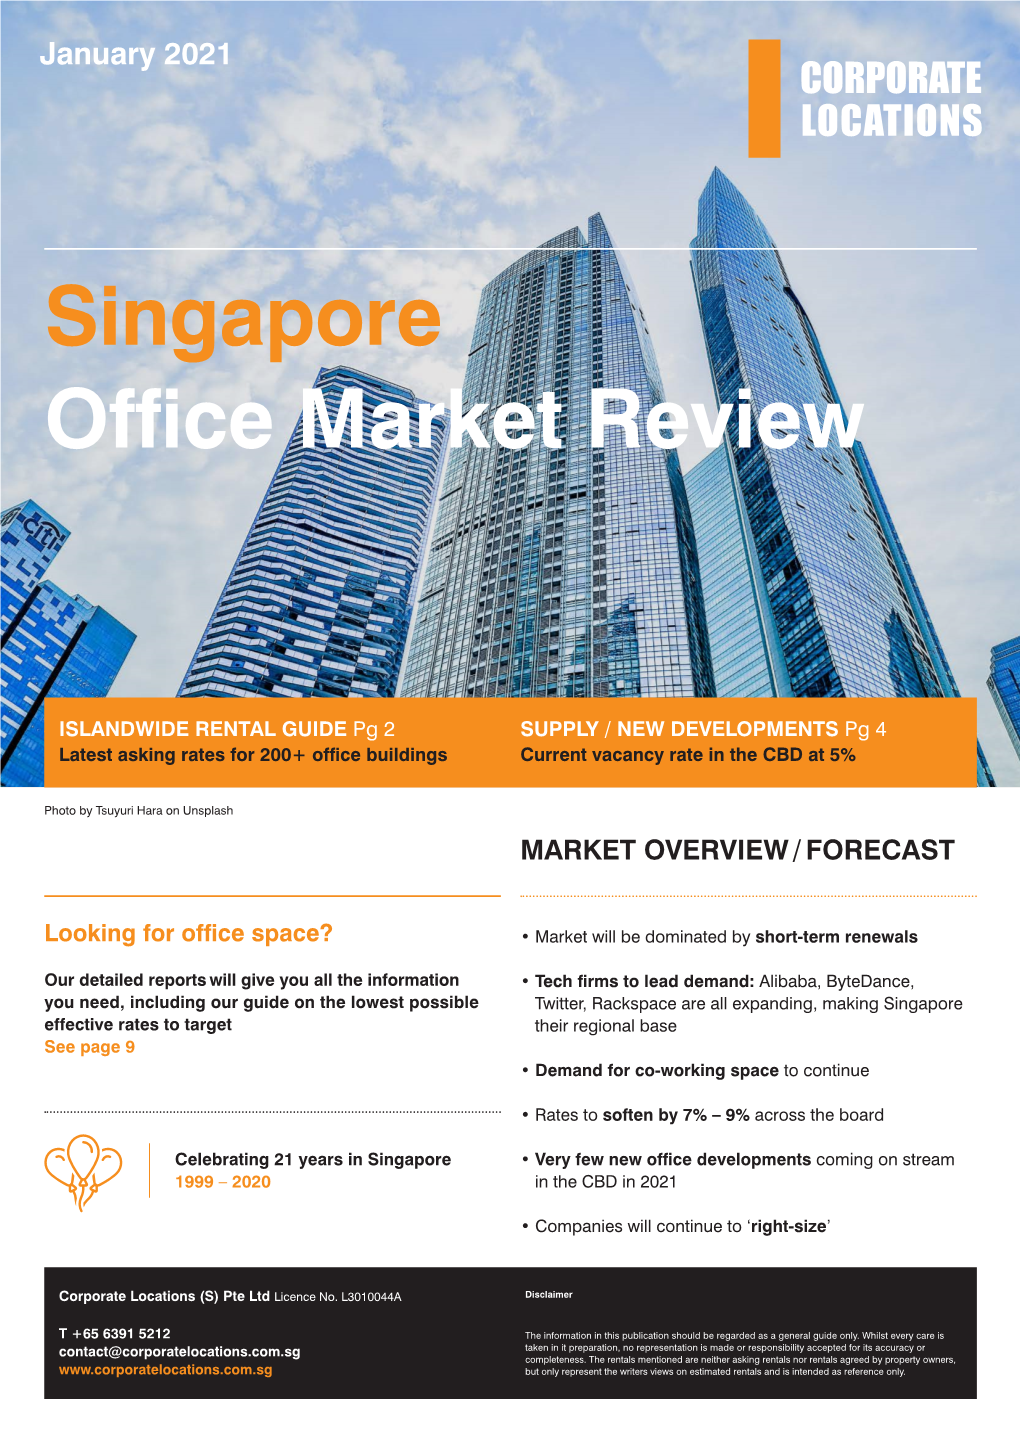 Singapore Office Market Review